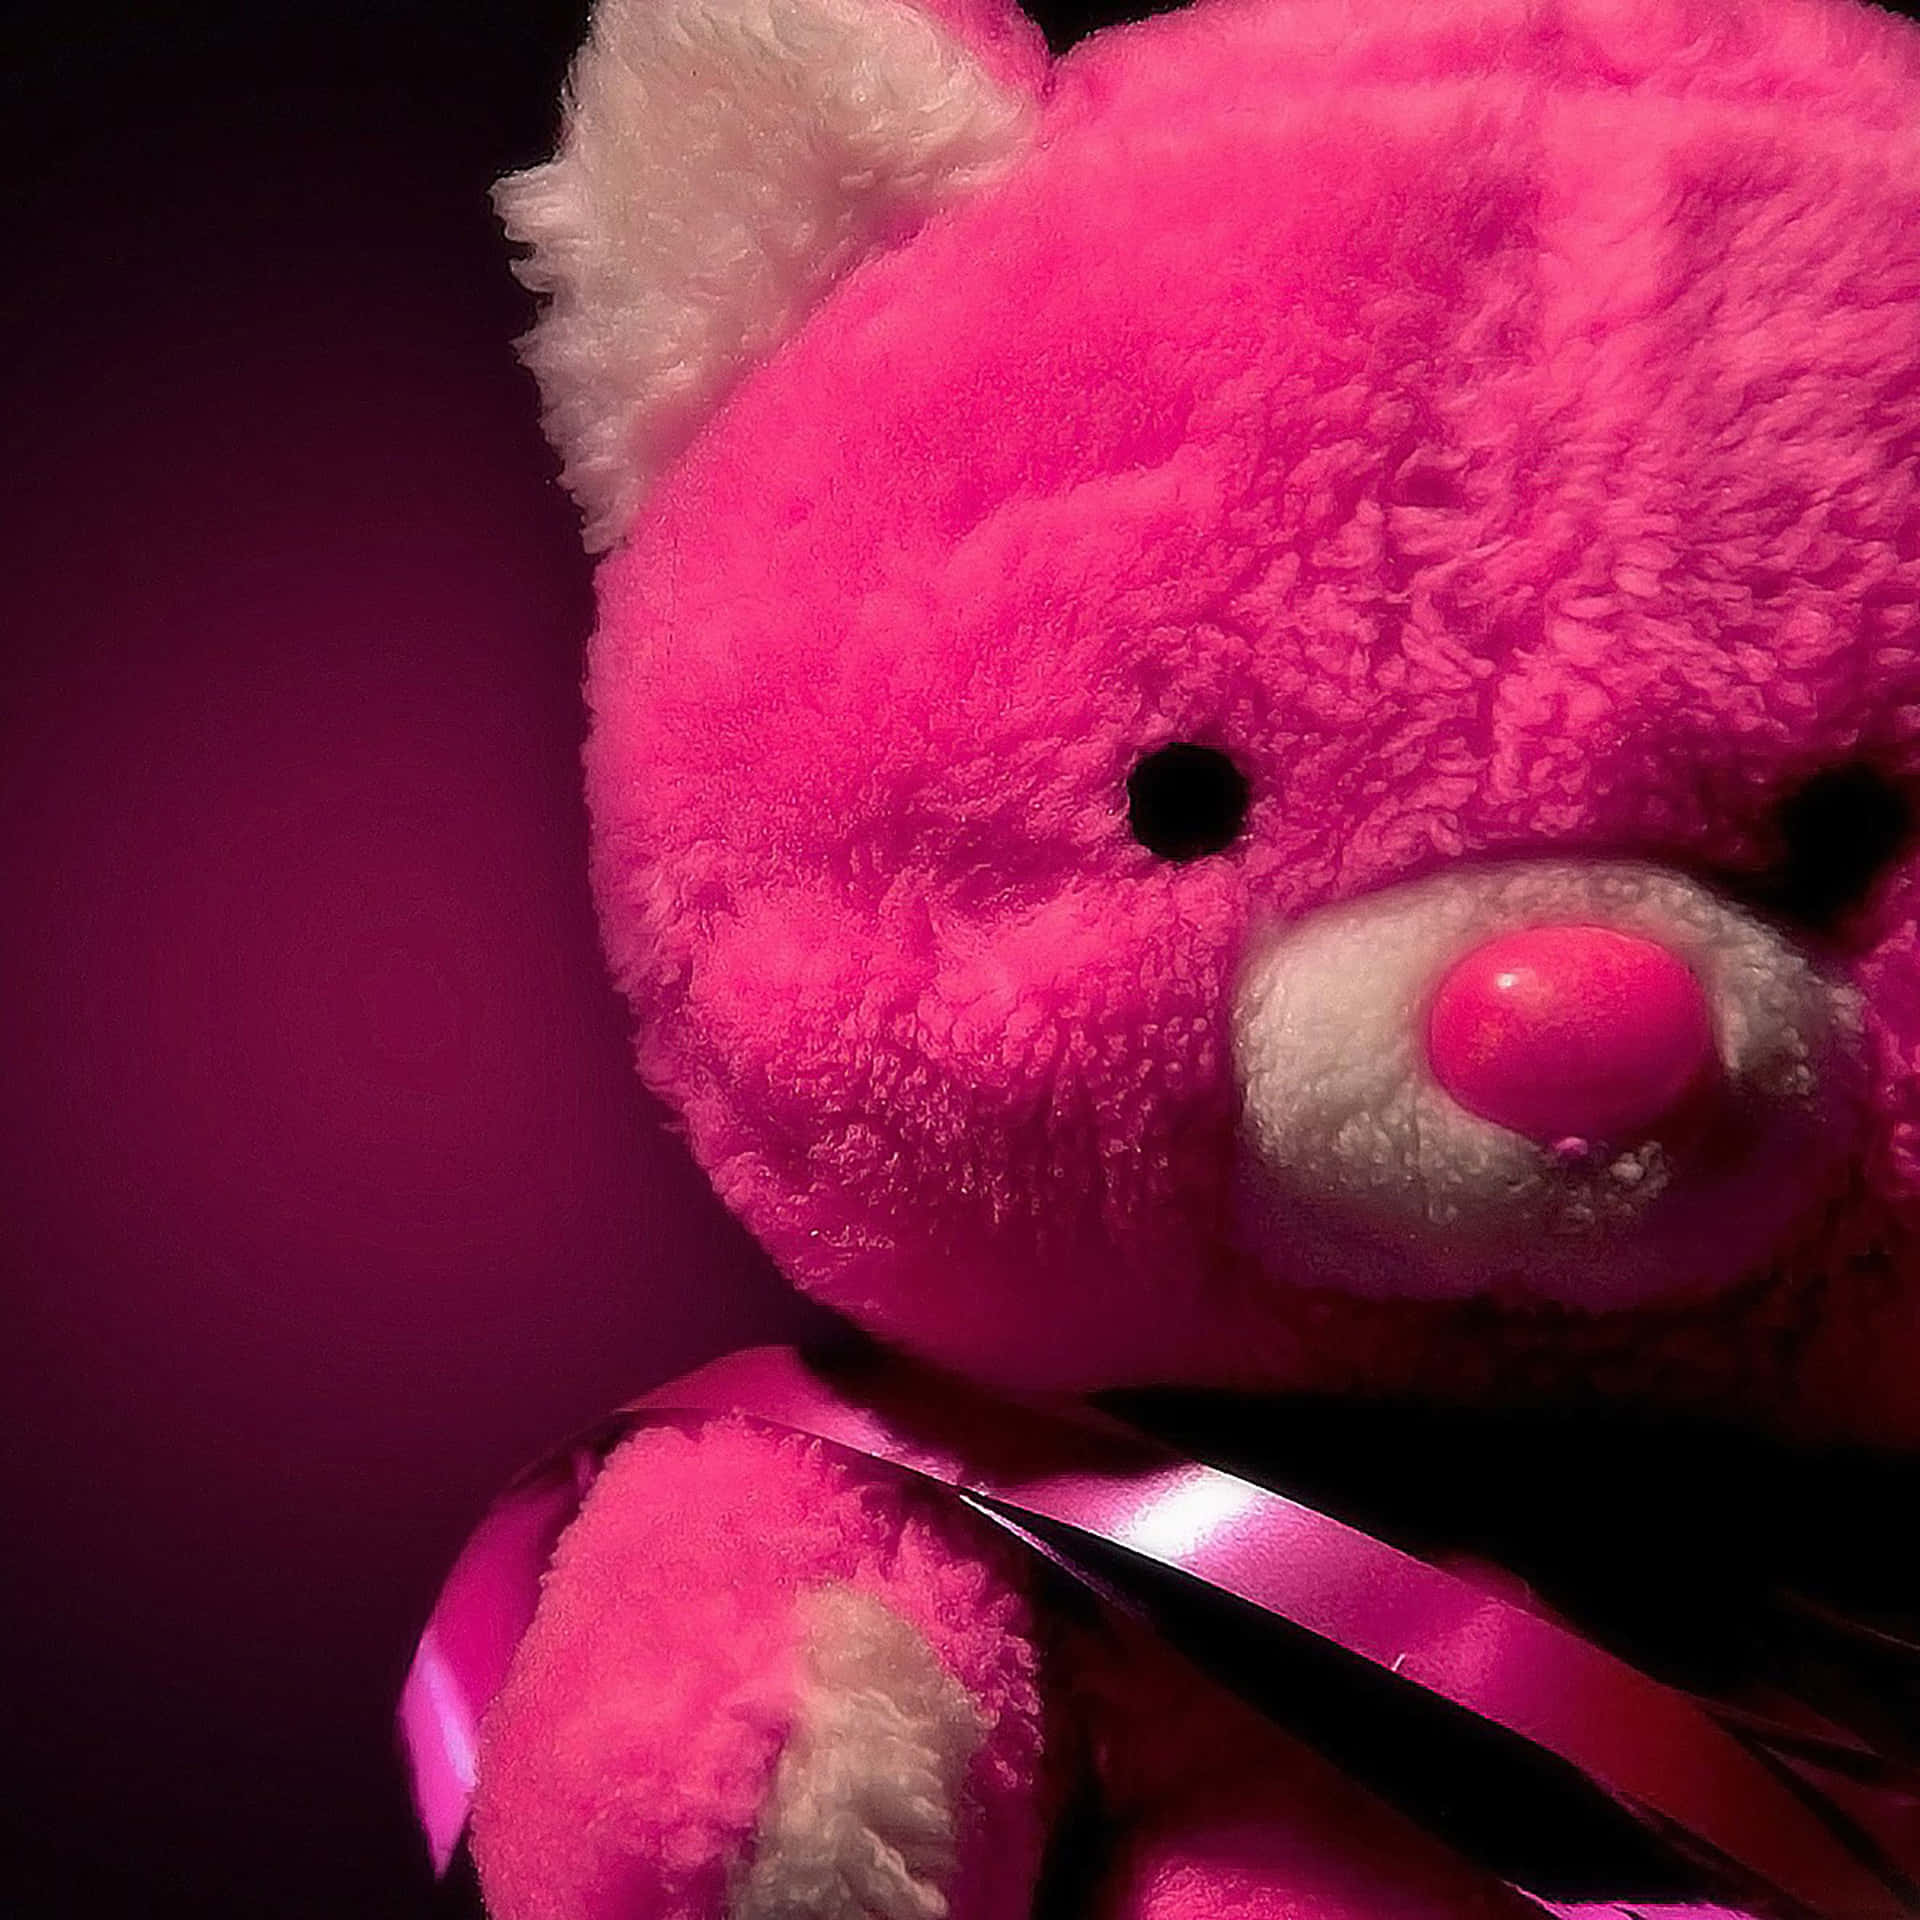 Pink Ipad Cute Teddy Bear Photography Wallpaper